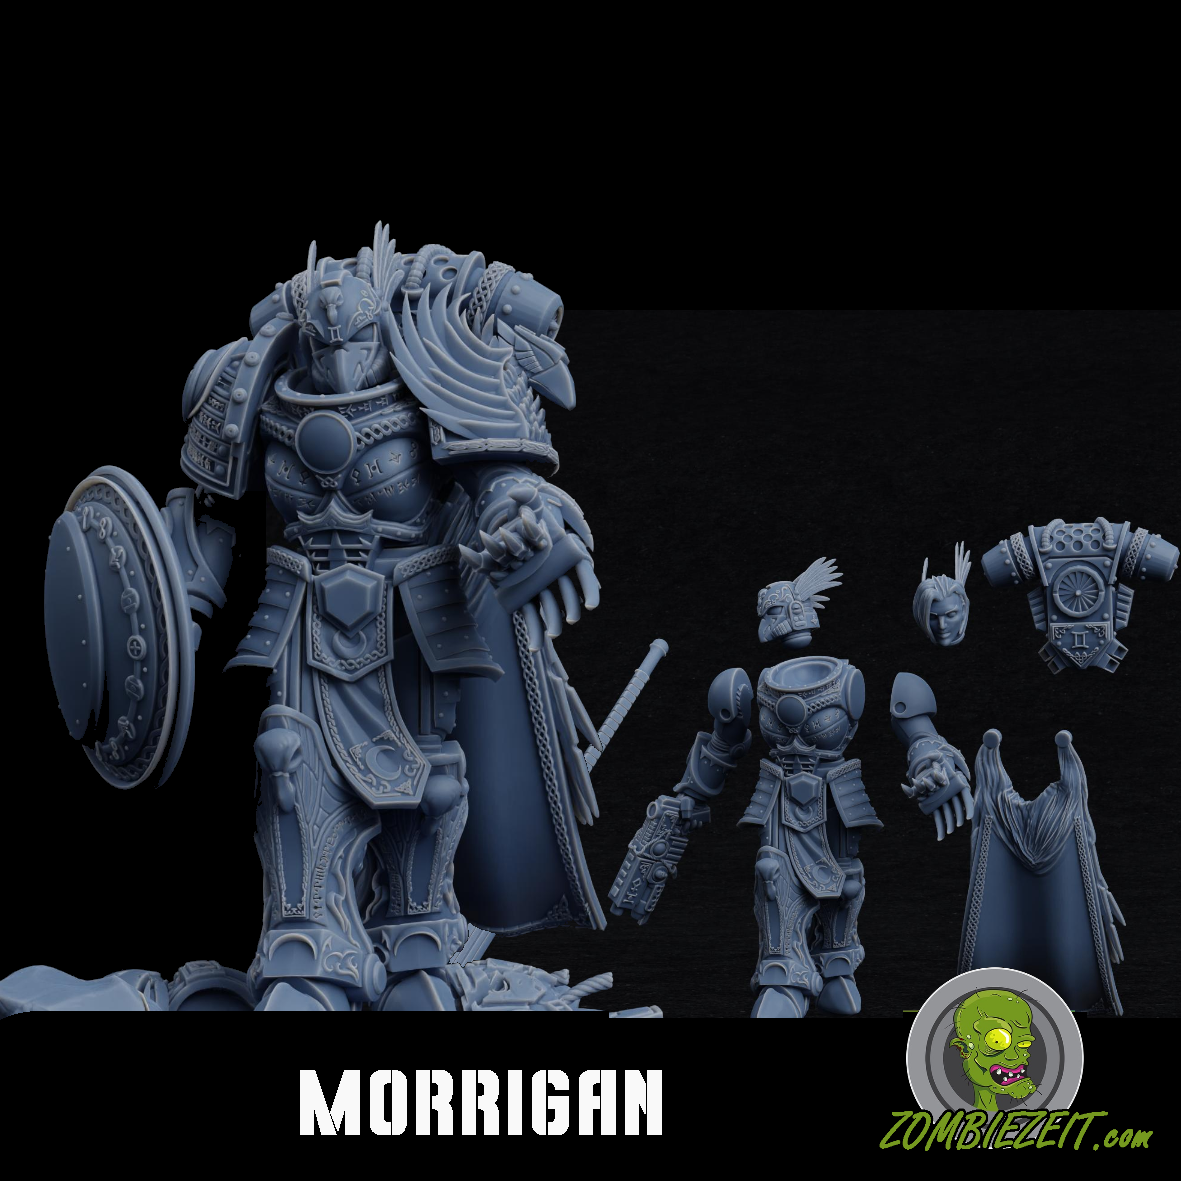 Morrigan - Prime Leader of Humanity